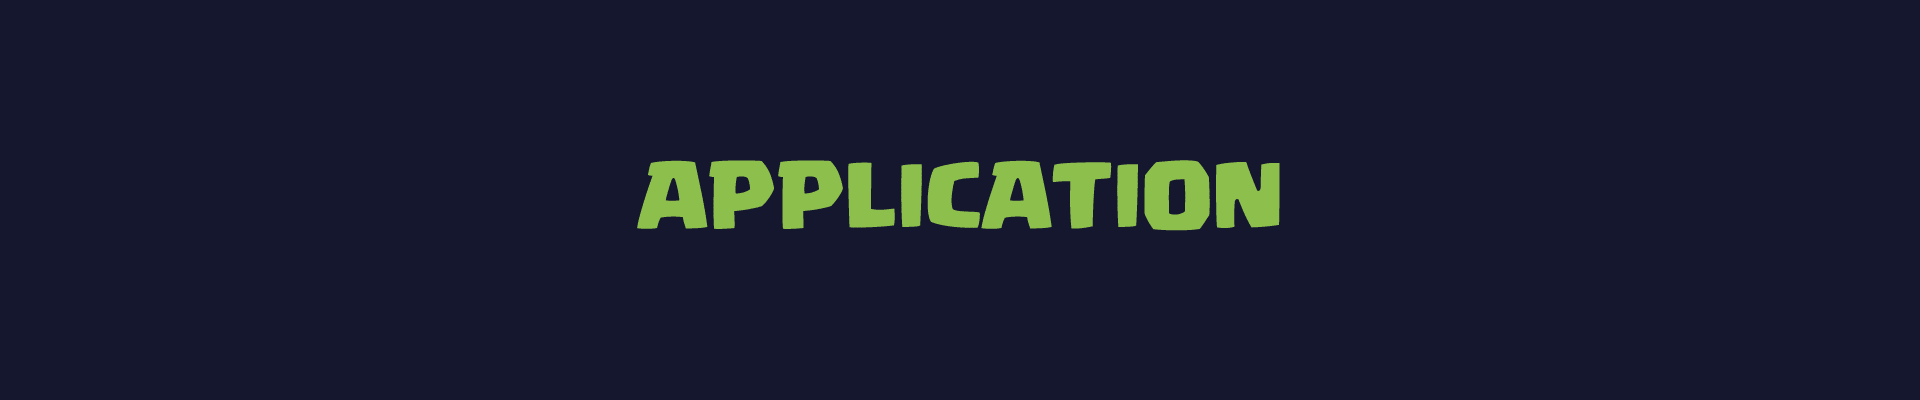 04_Application